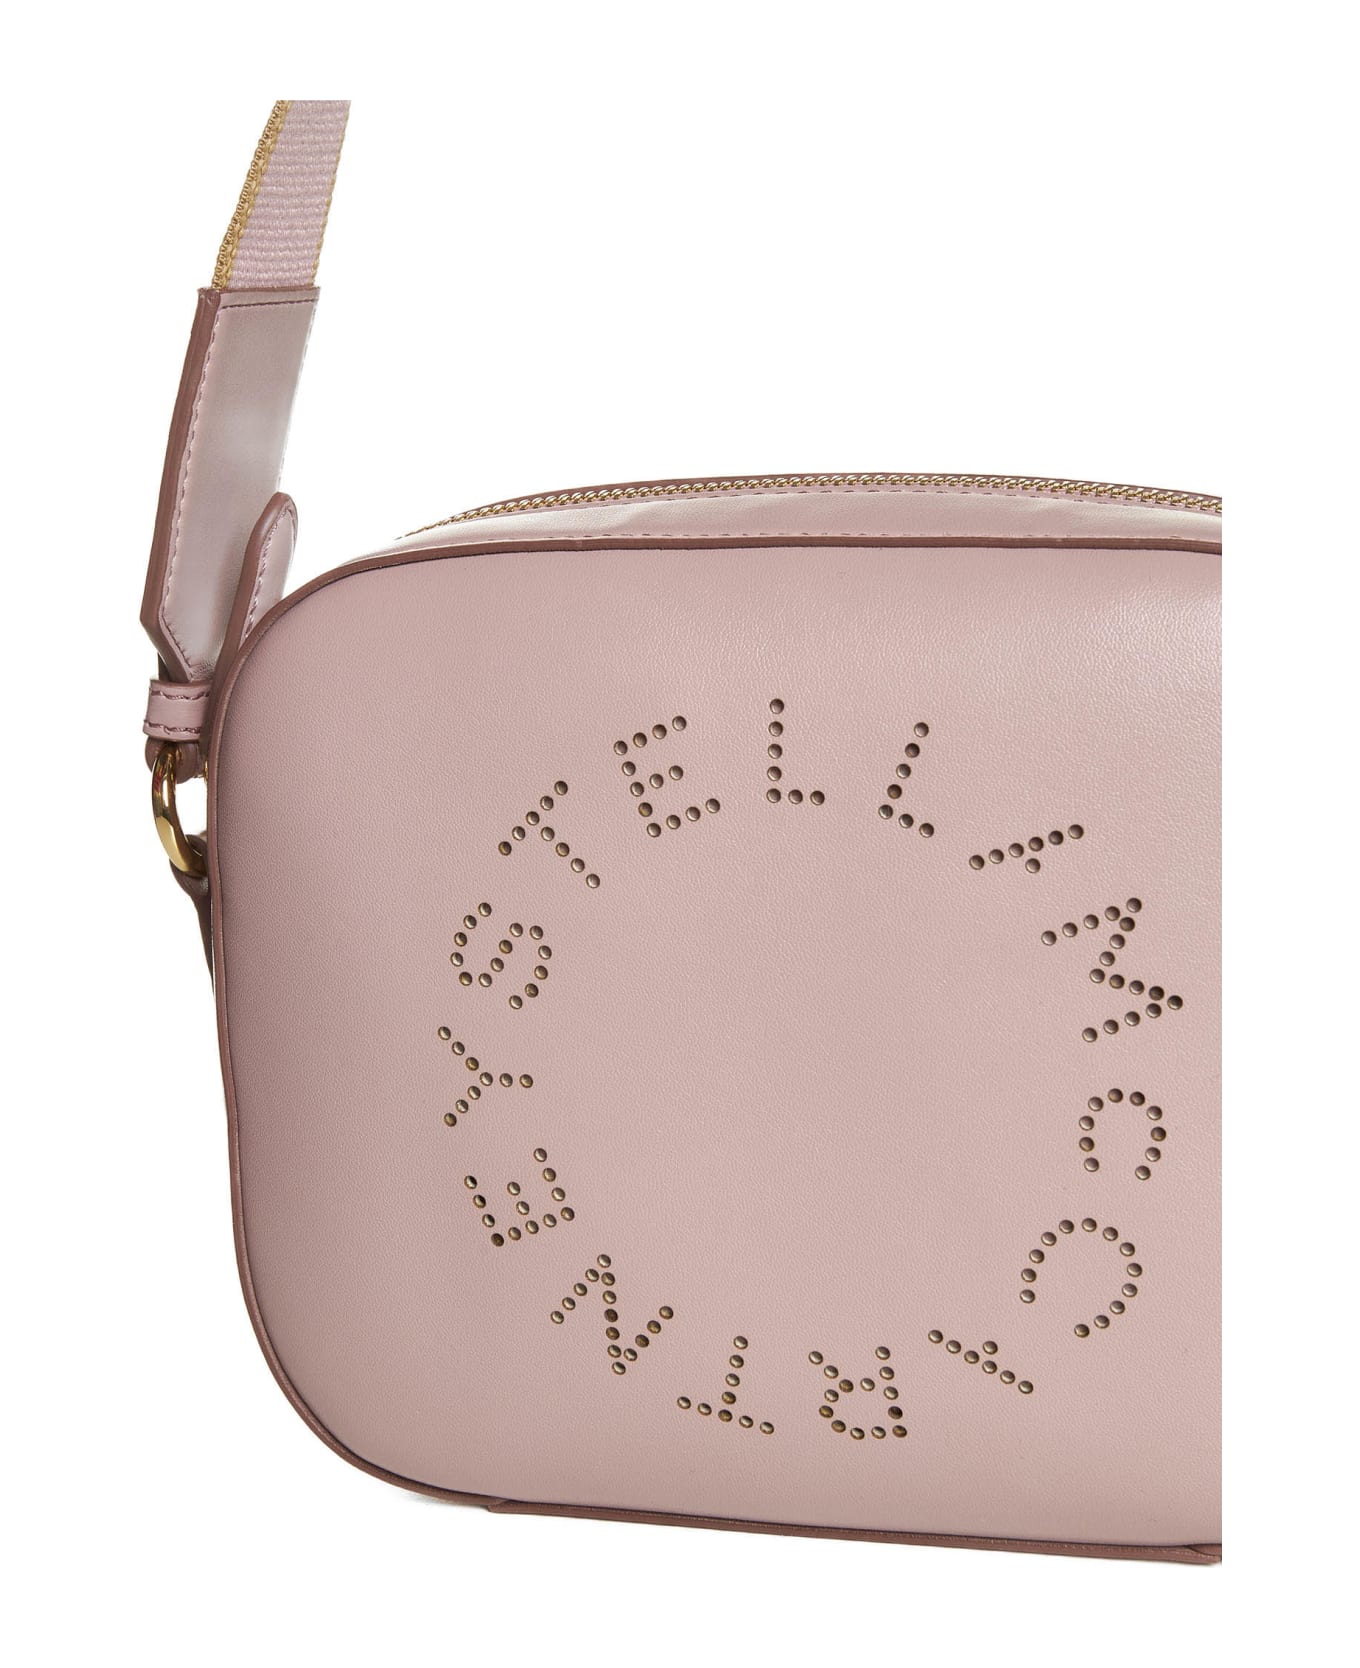 Stella McCartney Shoulder Bag - Shell